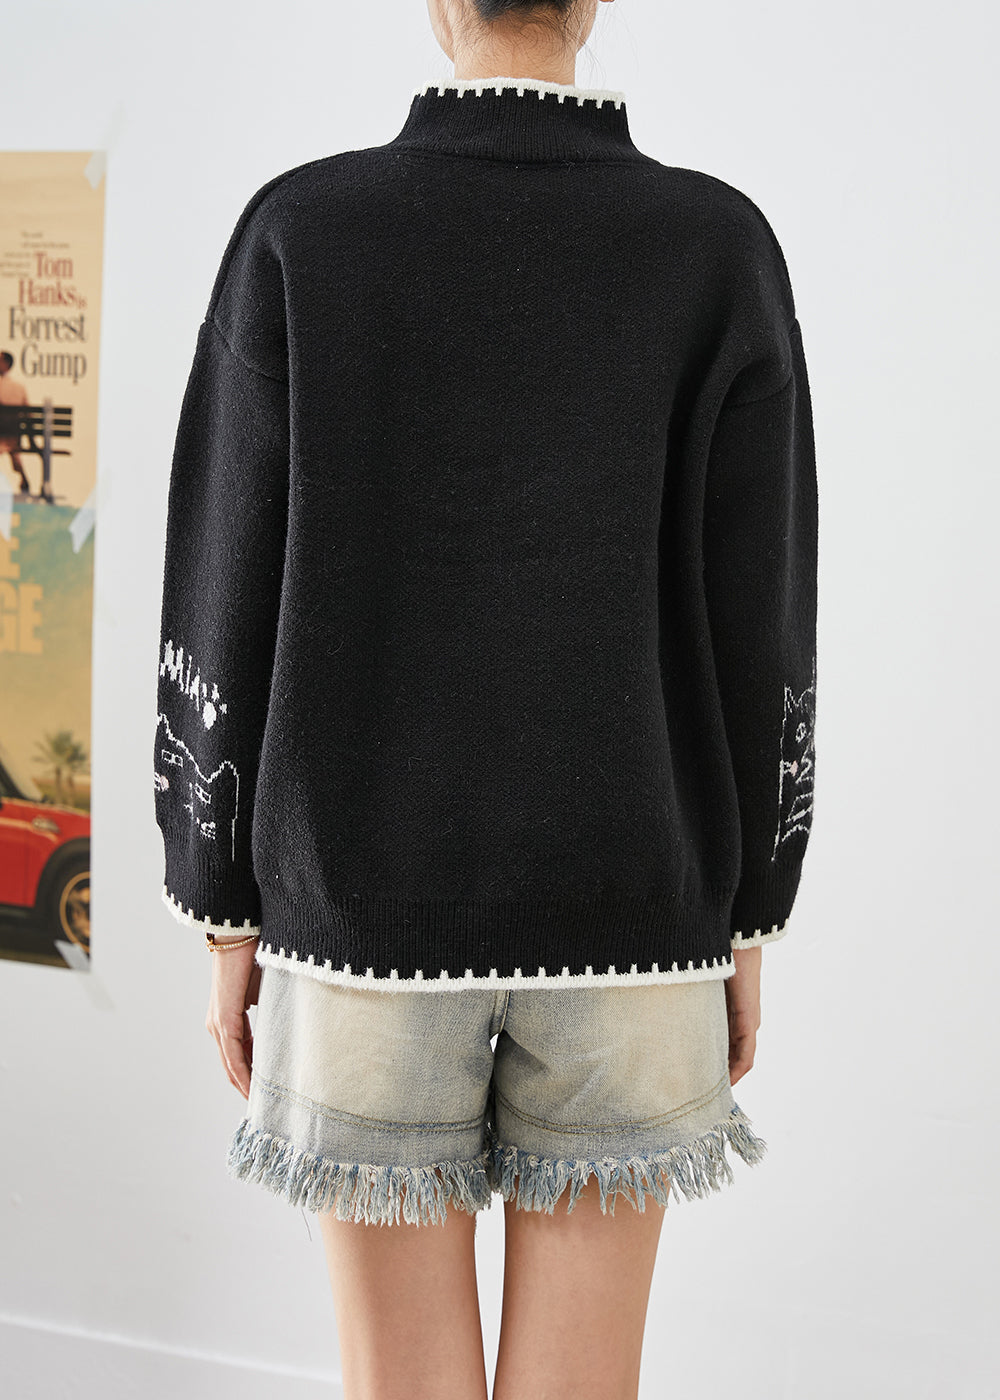 Classy Black Turtle Neck Print Knit Sweater Tops Fall